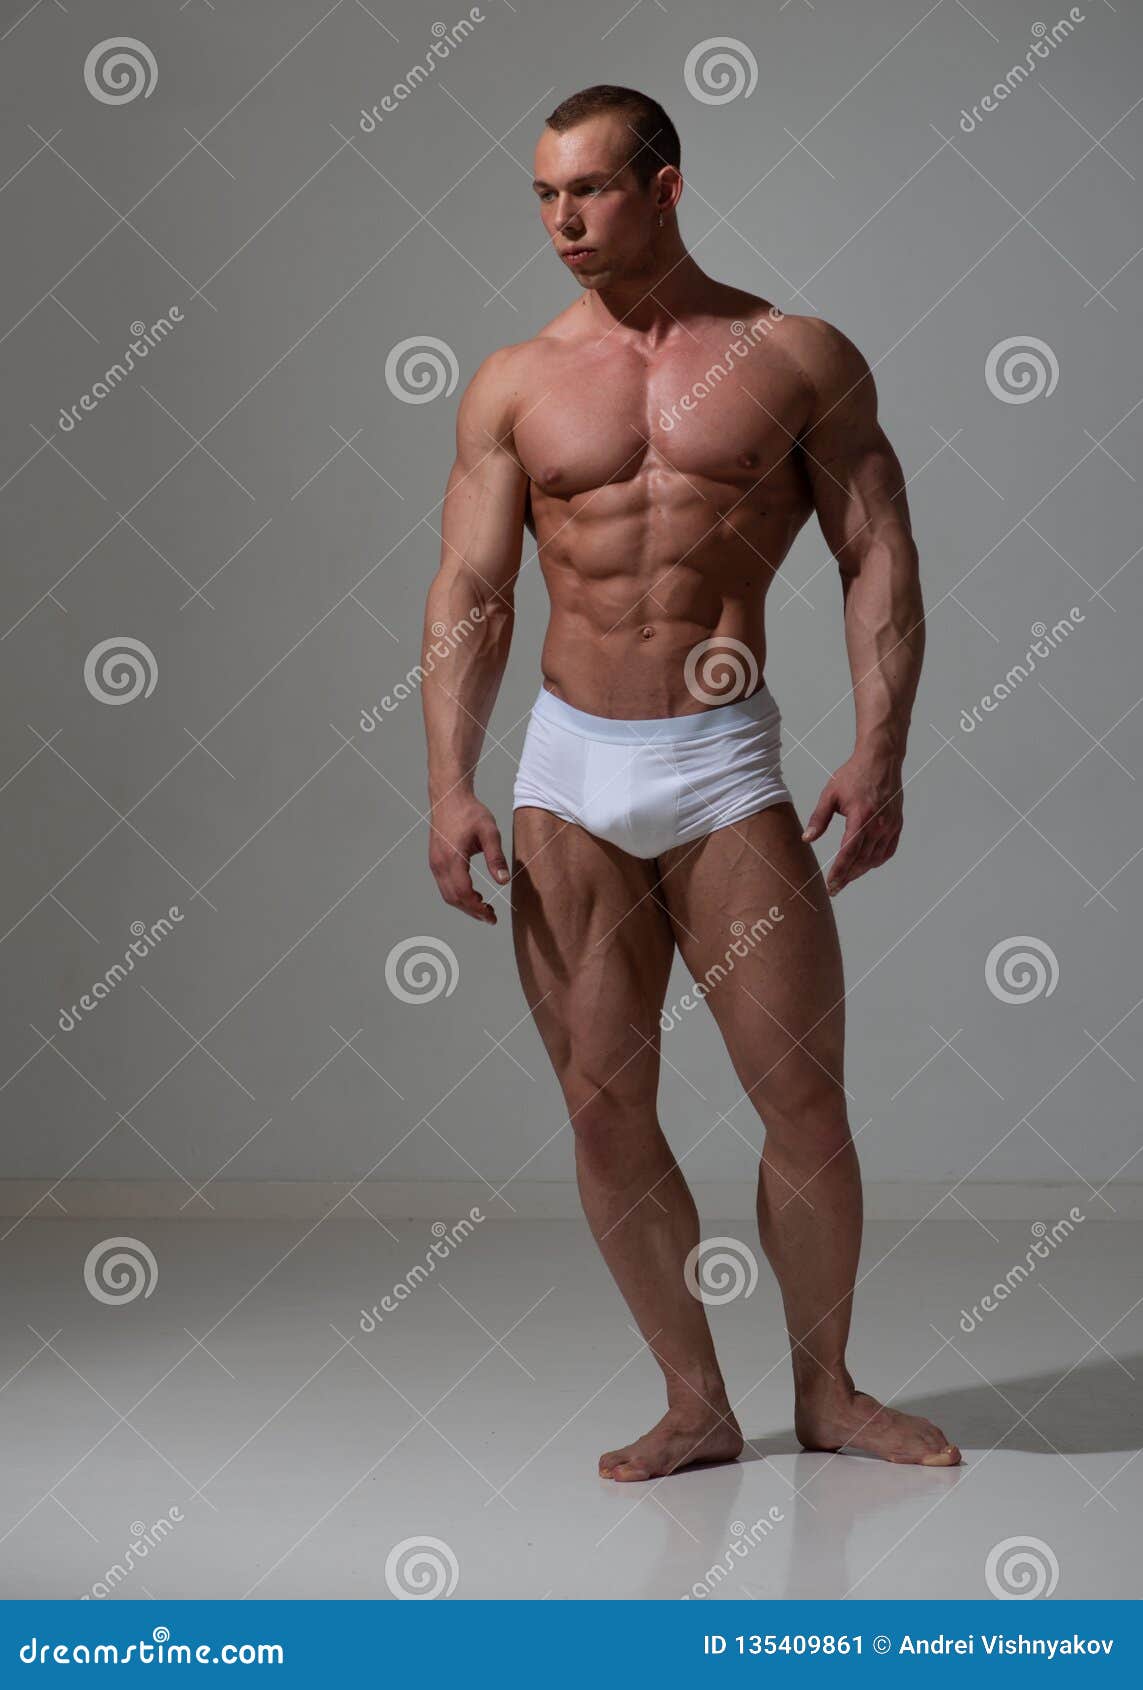 Very Sexy Games Bodybuilder Model Male